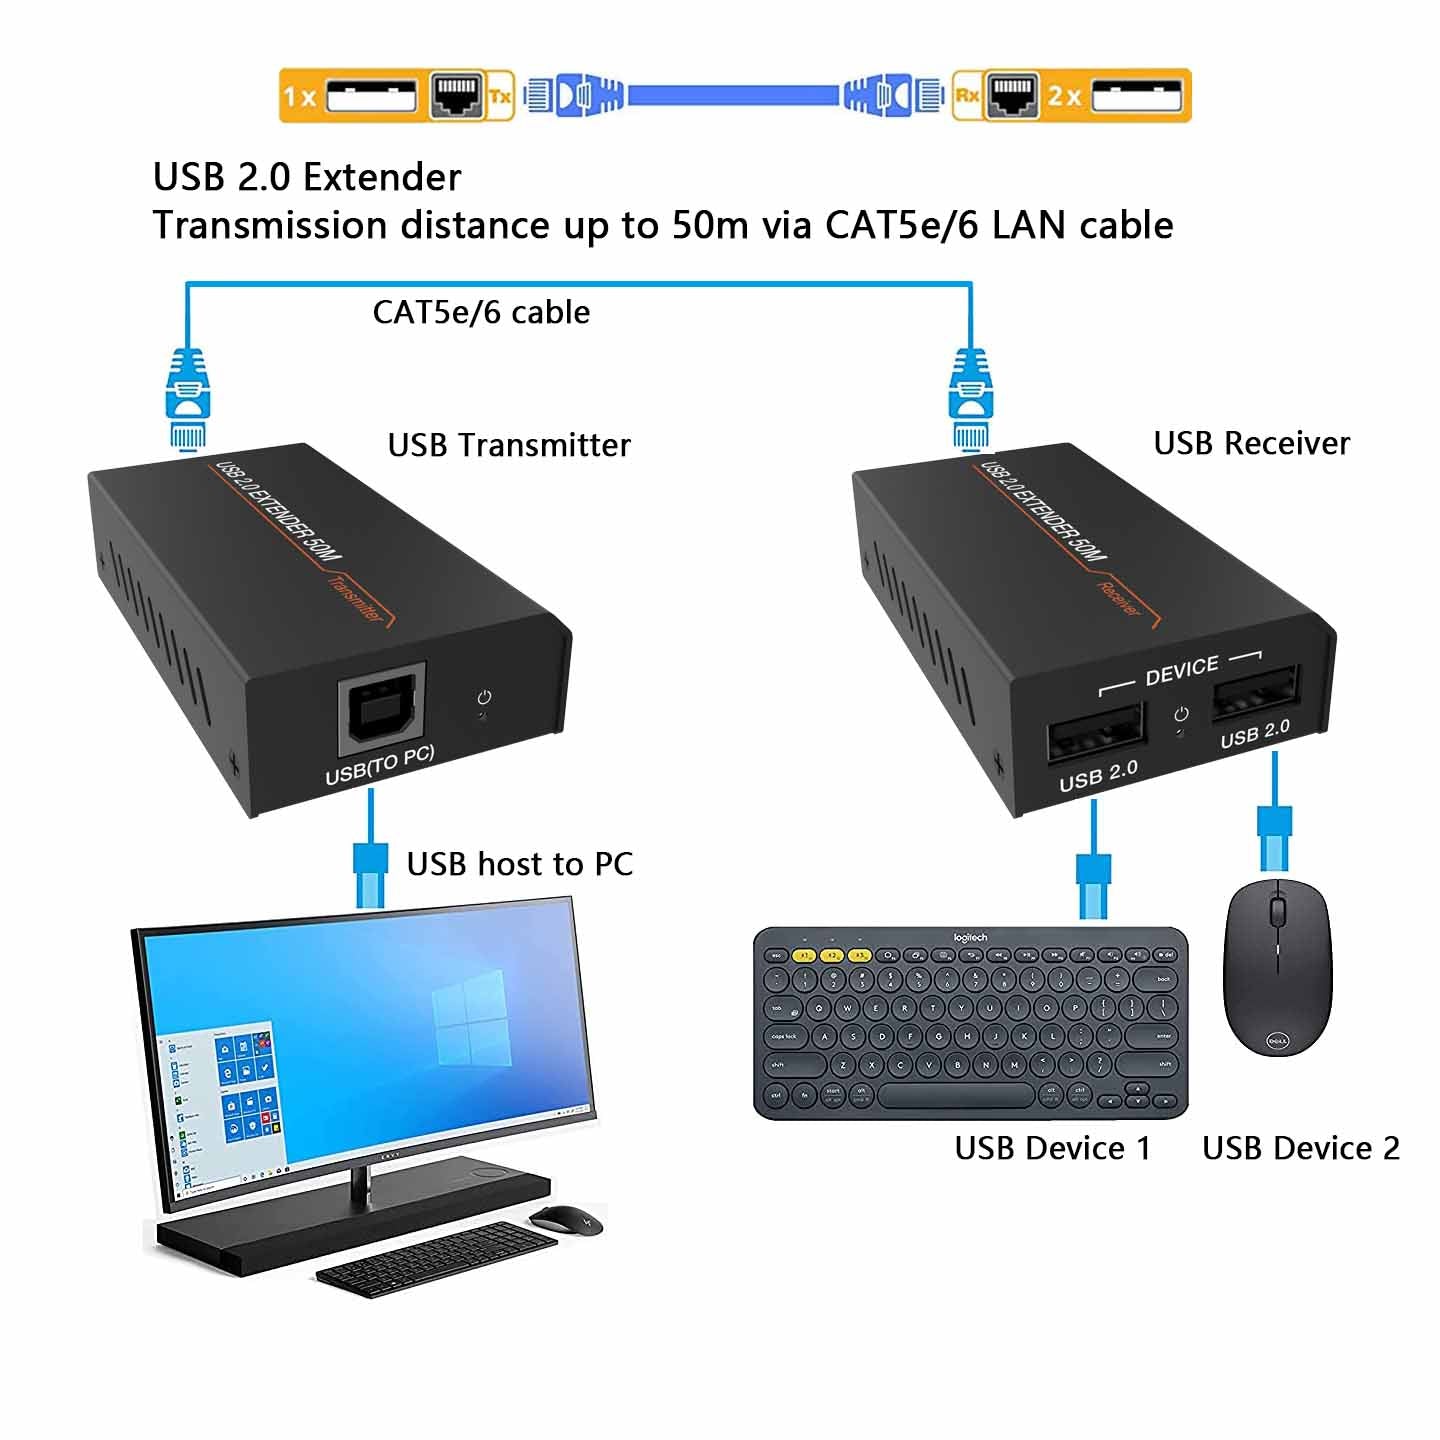 USB 2.0 Extender via CAT5e/6 LAN cable 50m transmission function